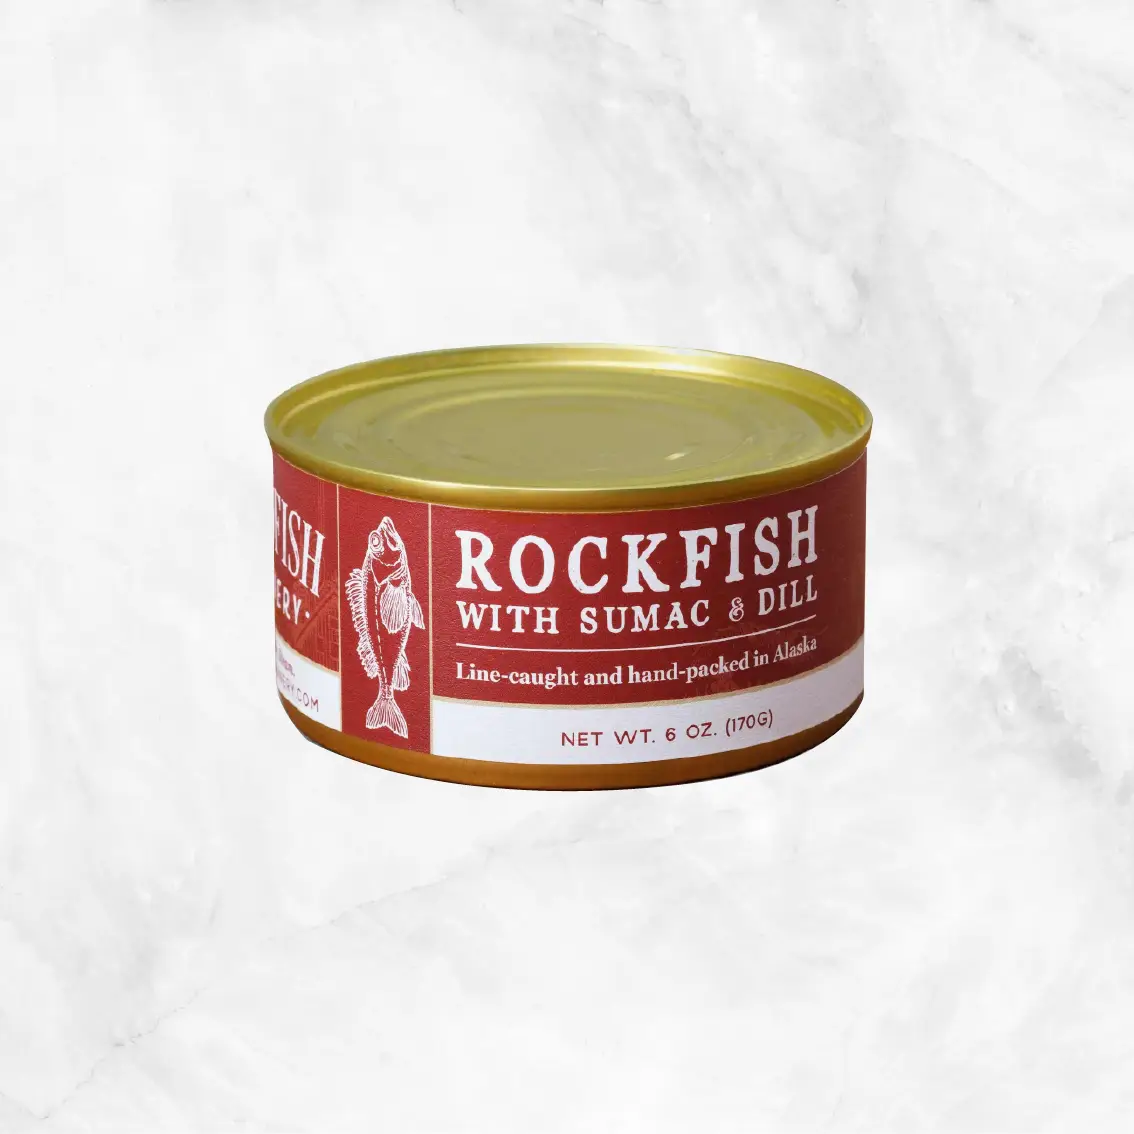 Rockfish in Sumac & Dill